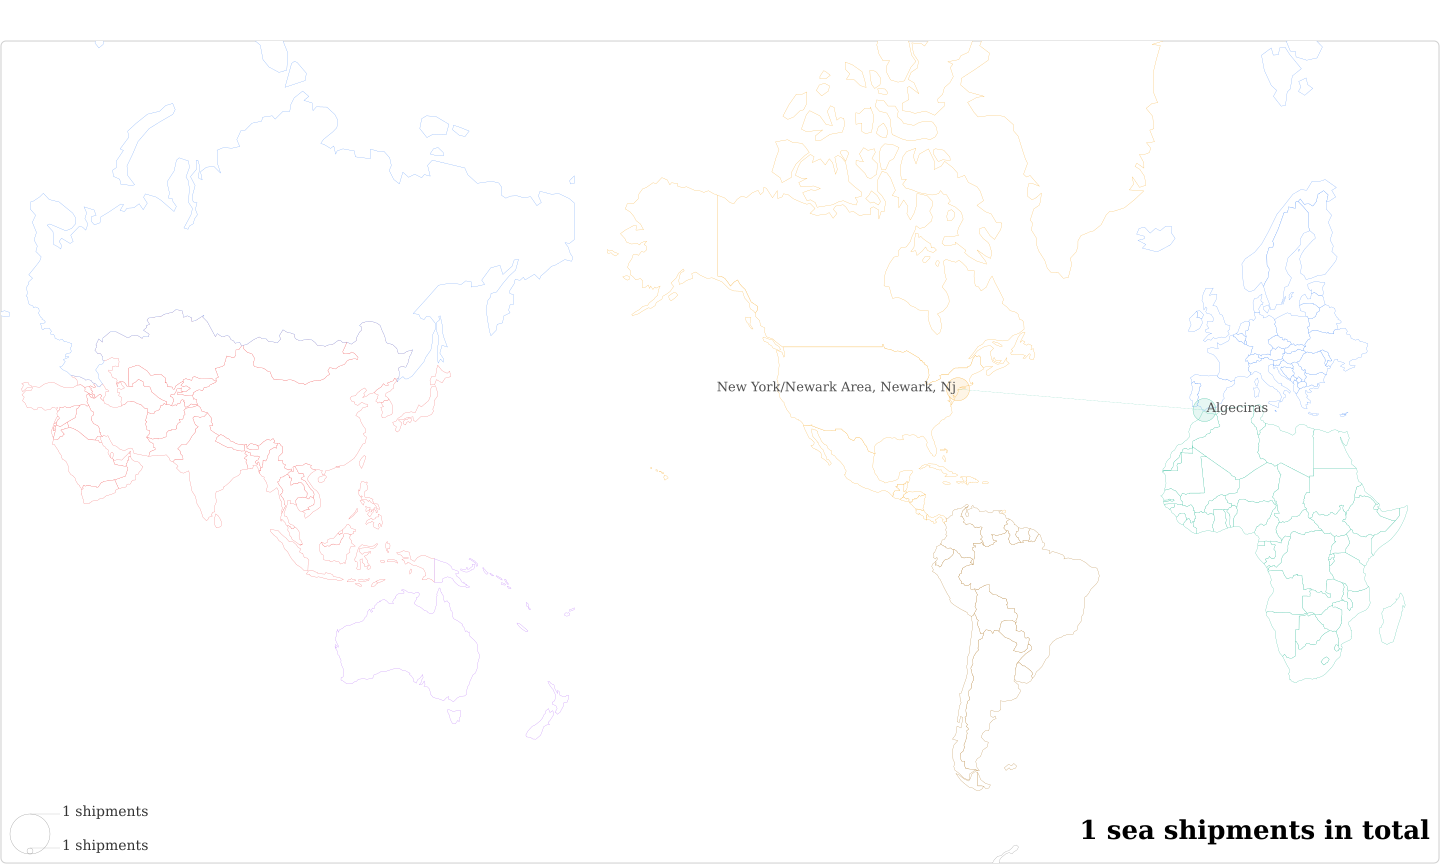 Mr Gerrit Utz's Imports Per Country Map